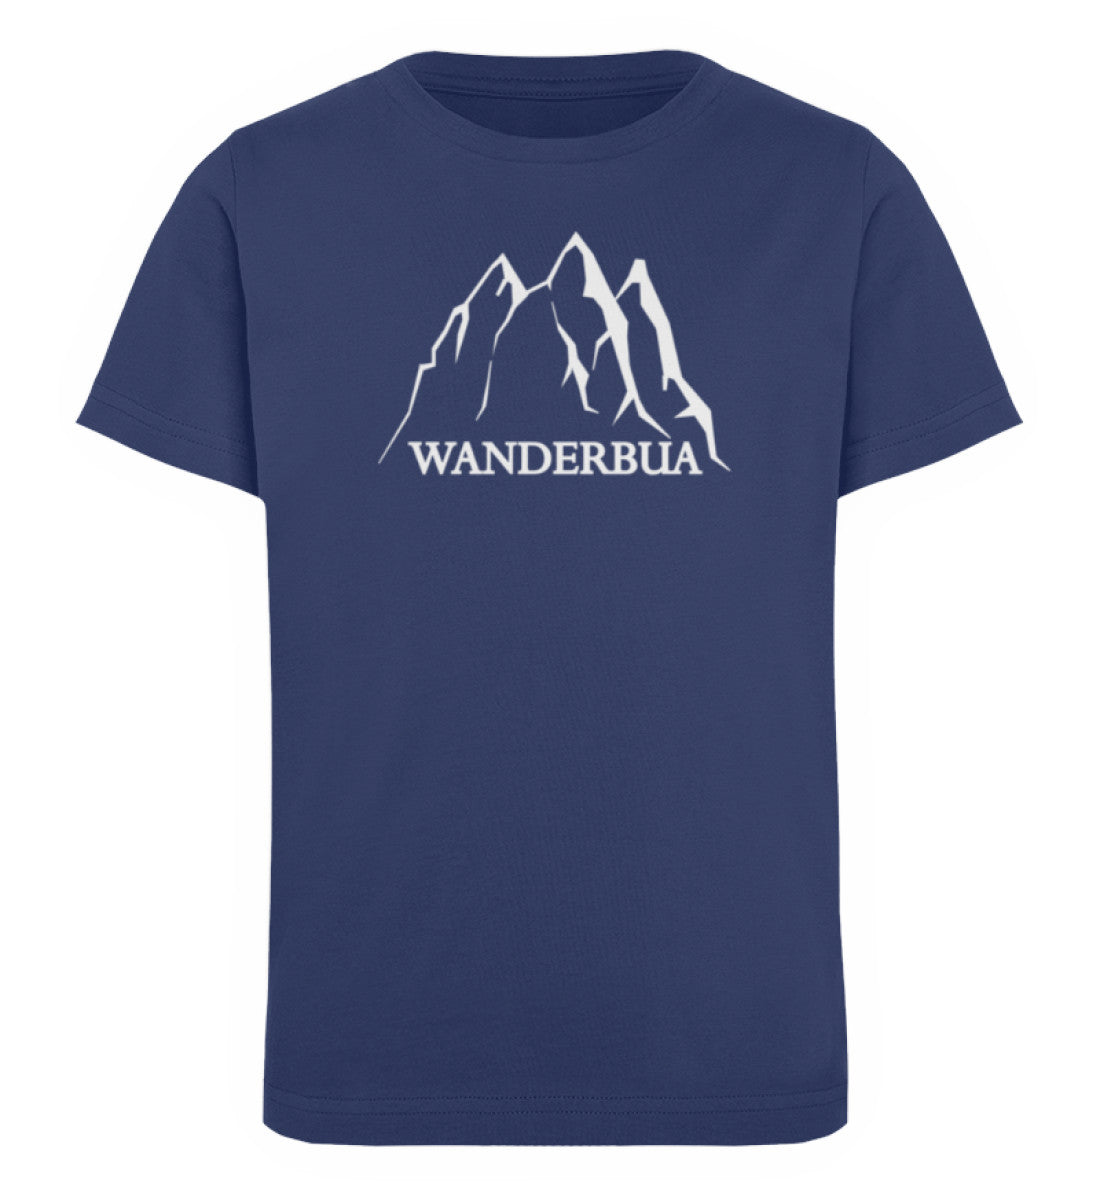 Wanderbua - Kinder Premium Organic T-Shirt Navyblau